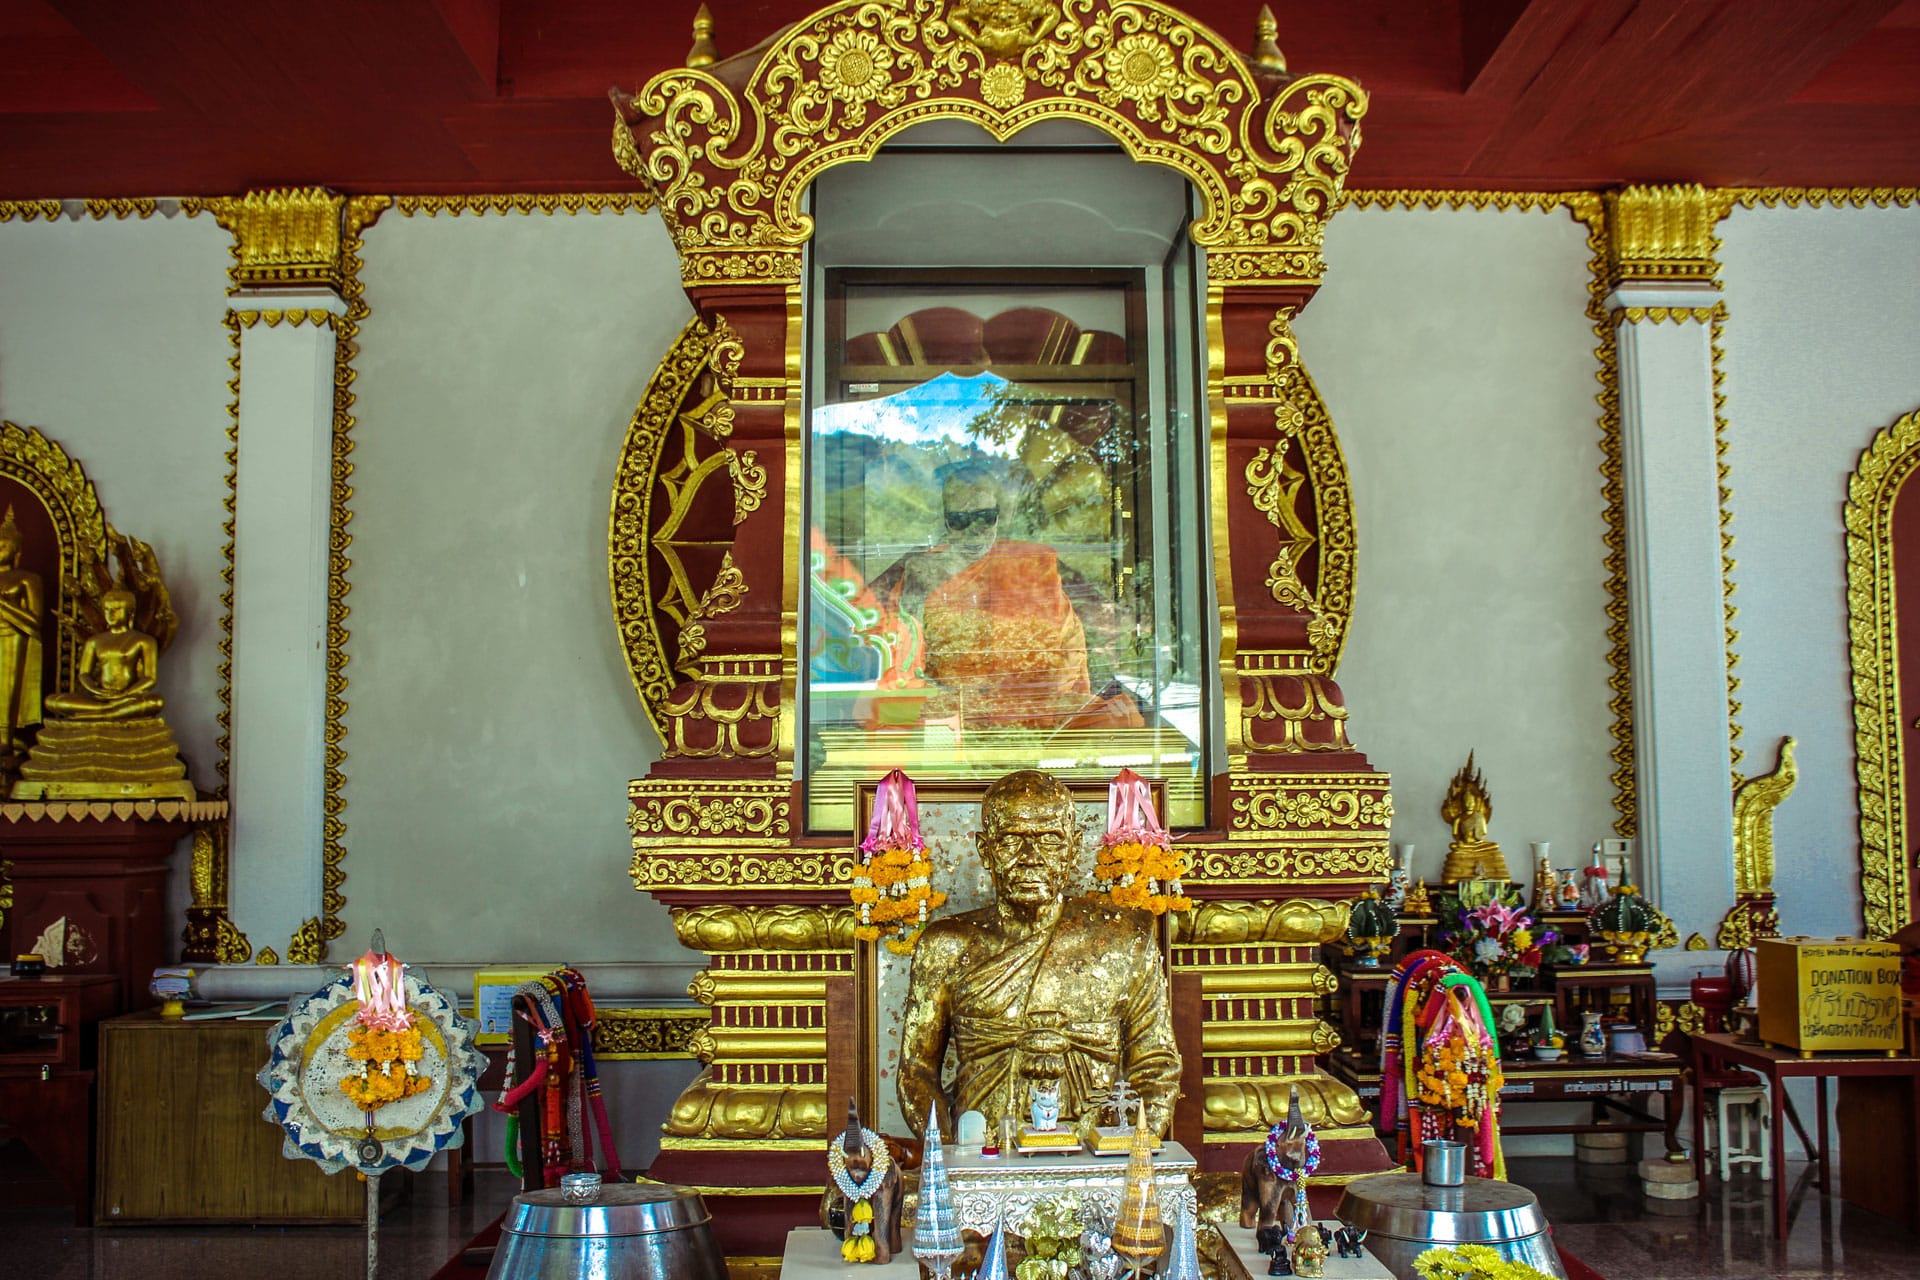 The Mummified Monk at Wat Khunaram on Koh Samui, Thailand